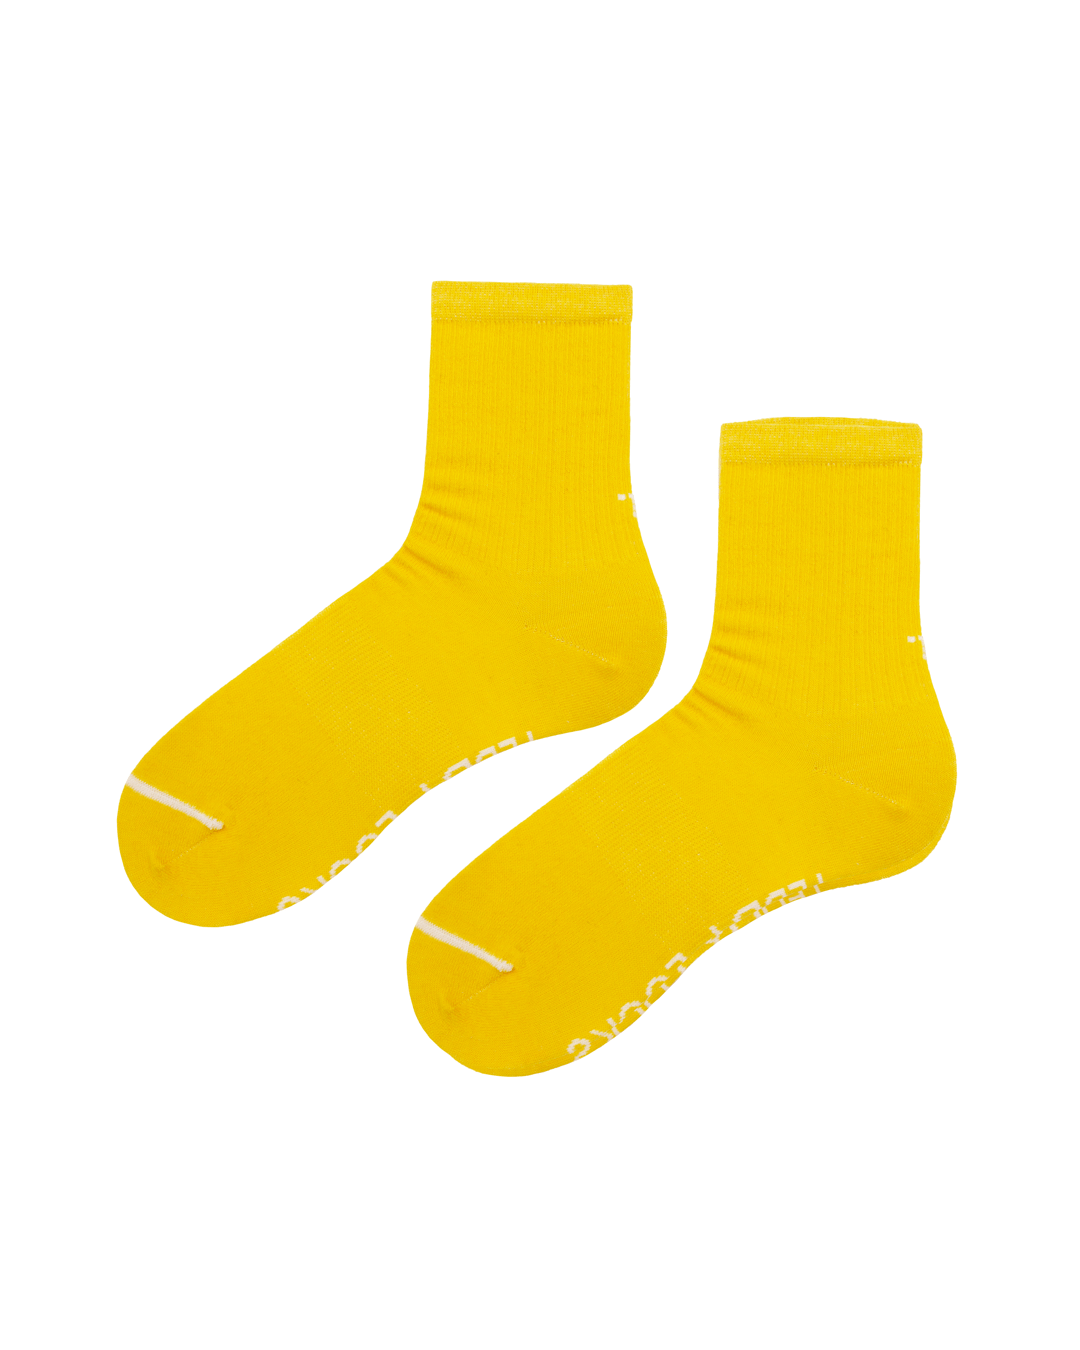 Sustainable Socks | Teddy Locks - Yellow Ribbed Crew Socks